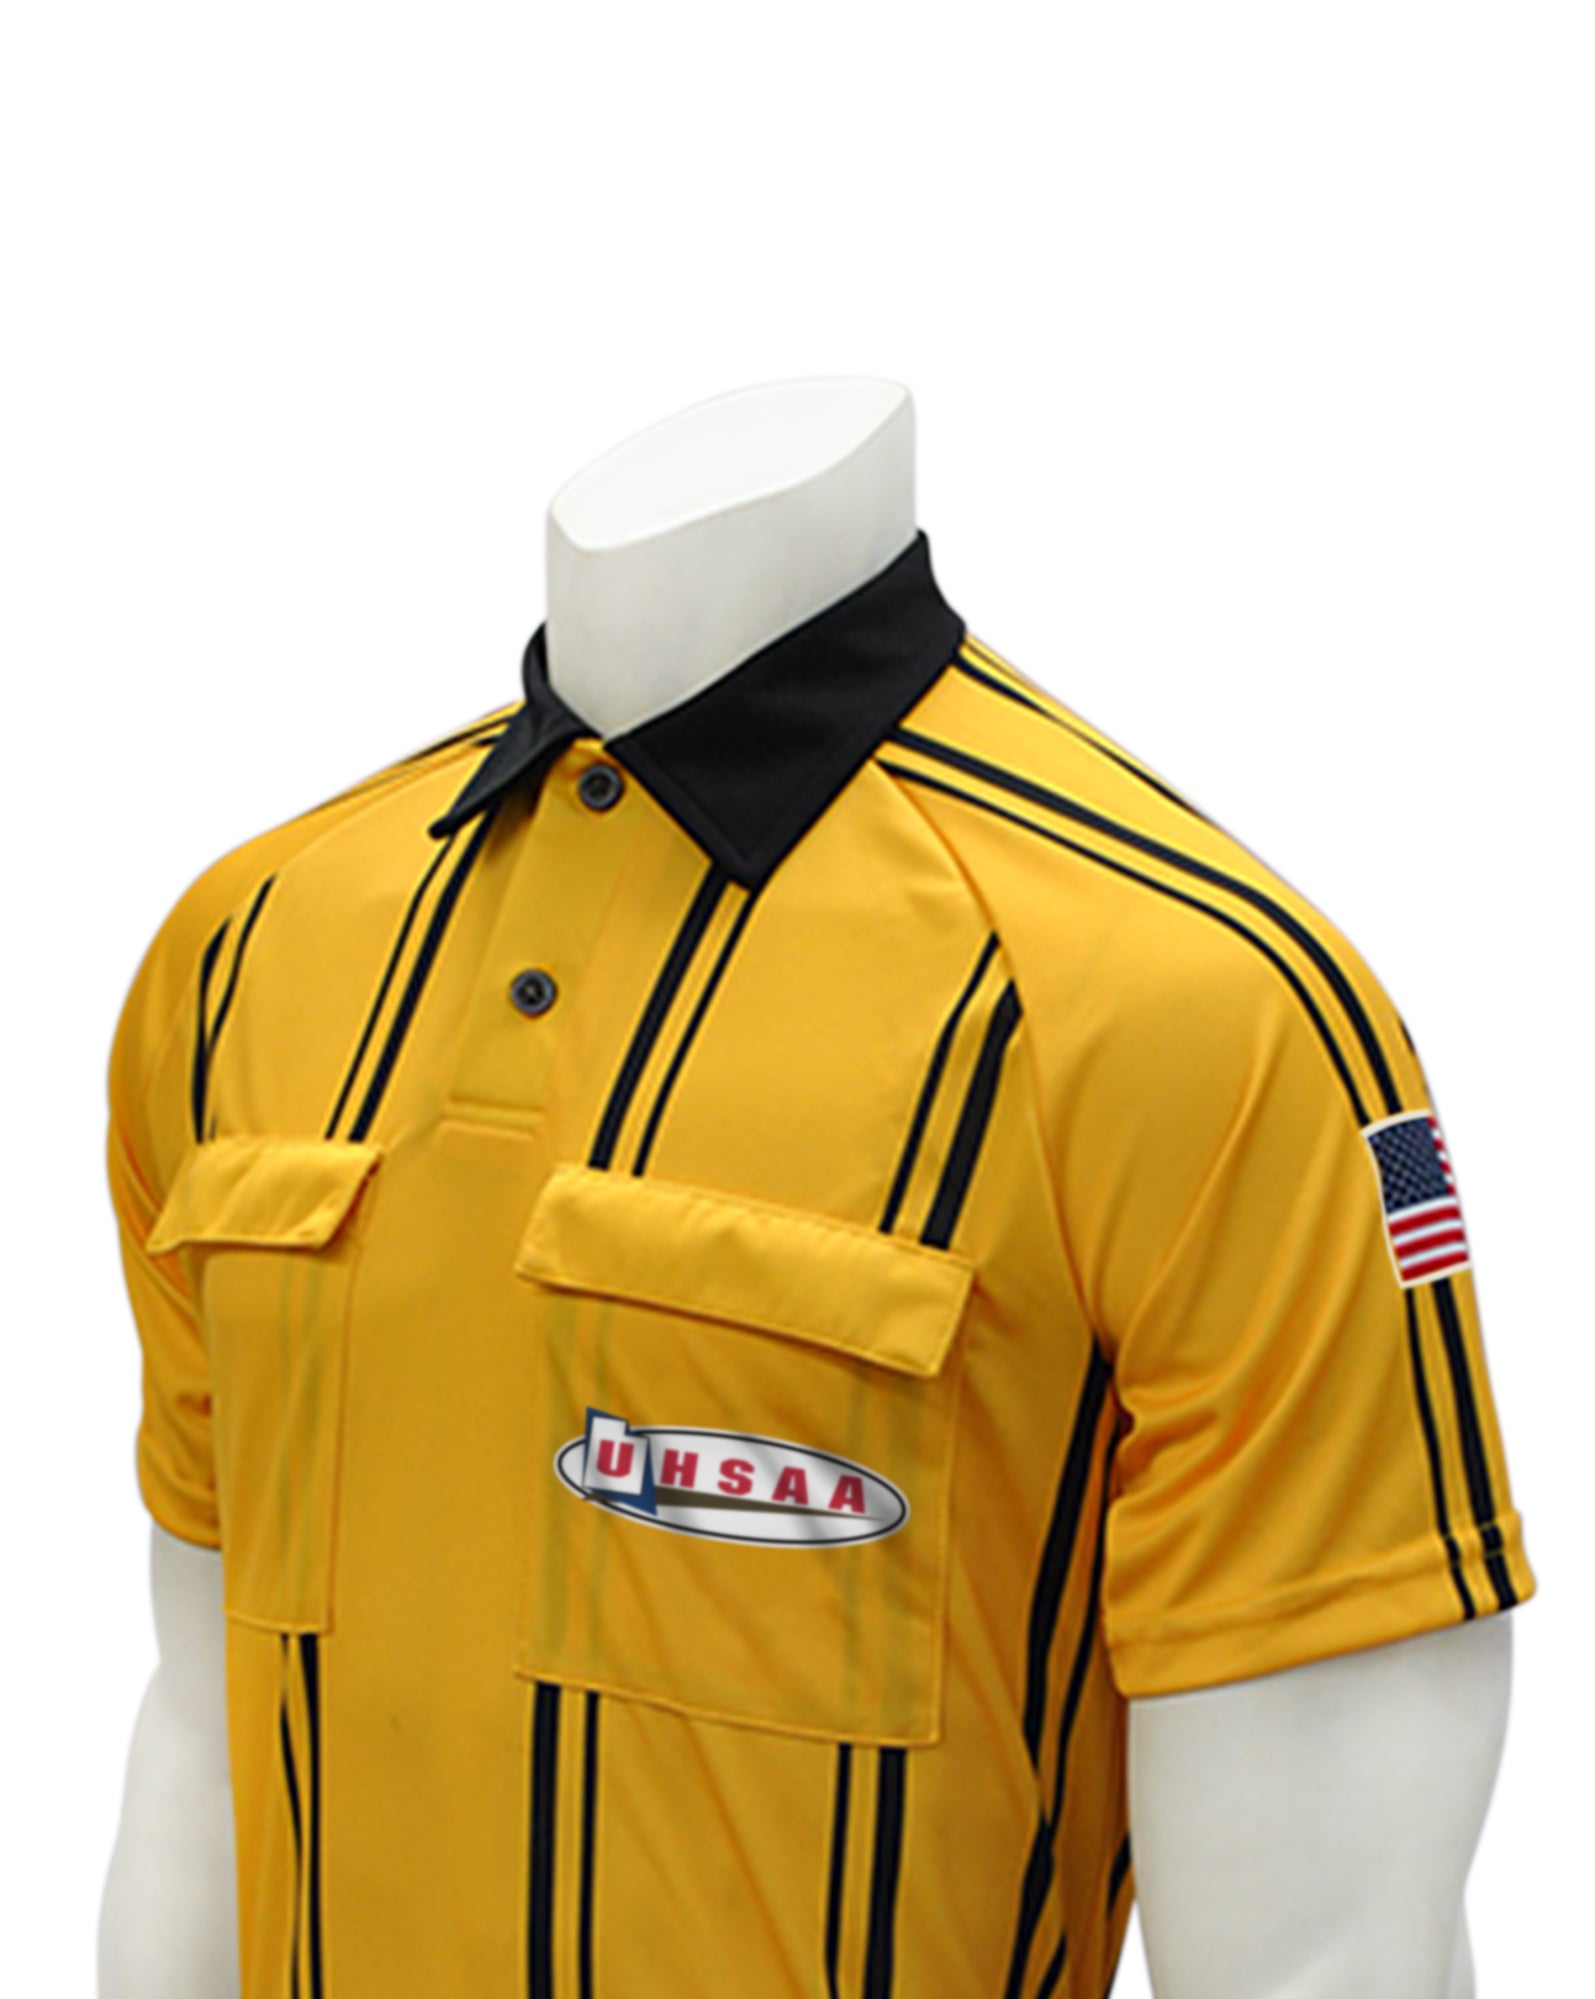 USA900UT - Smitty "Made in USA" - Dye Sub Gold Soccer Short Sleeve Shirt